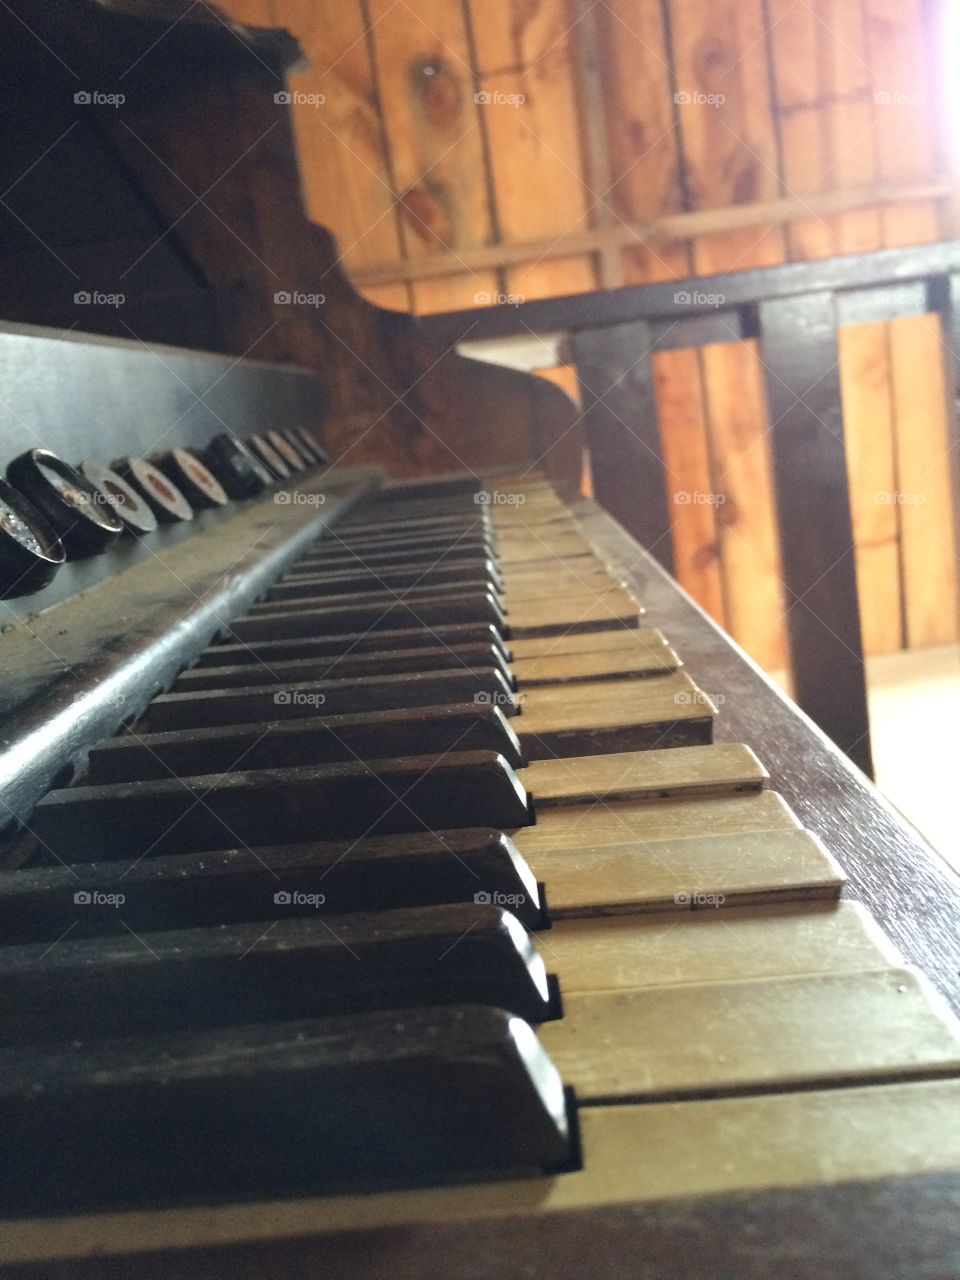 Piano. Keyboard